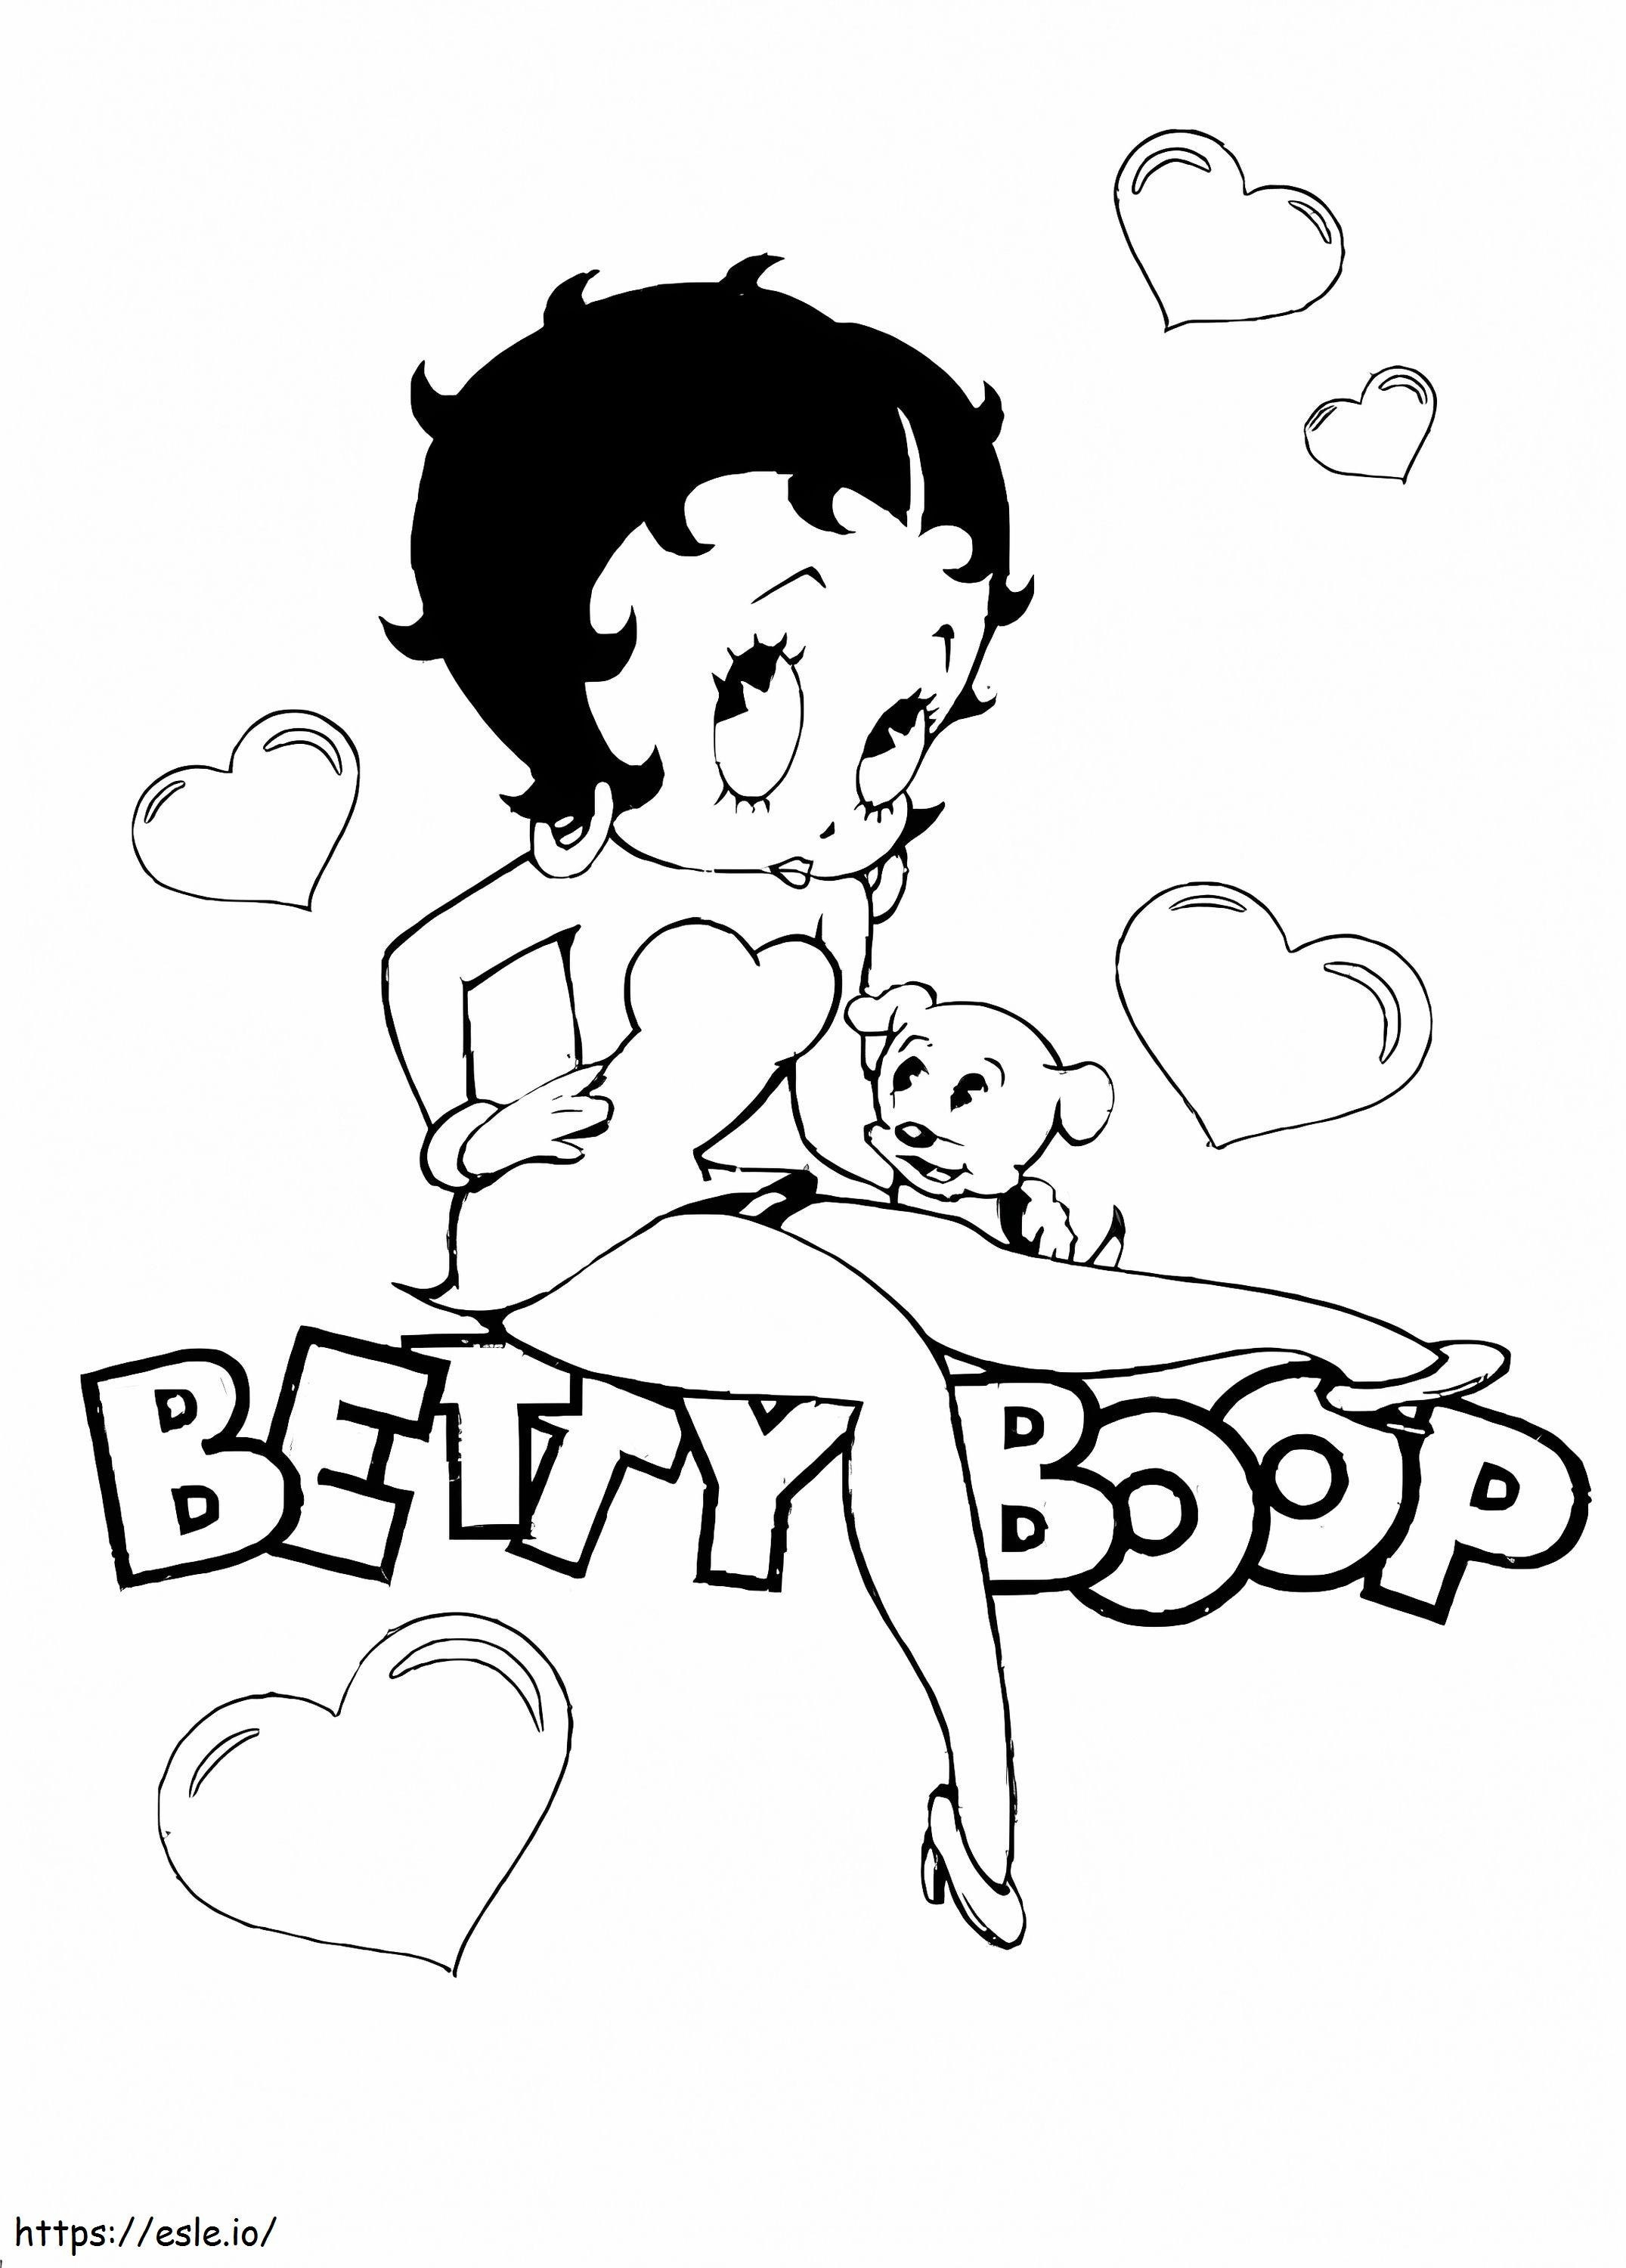 Betty Boop kolorowanka